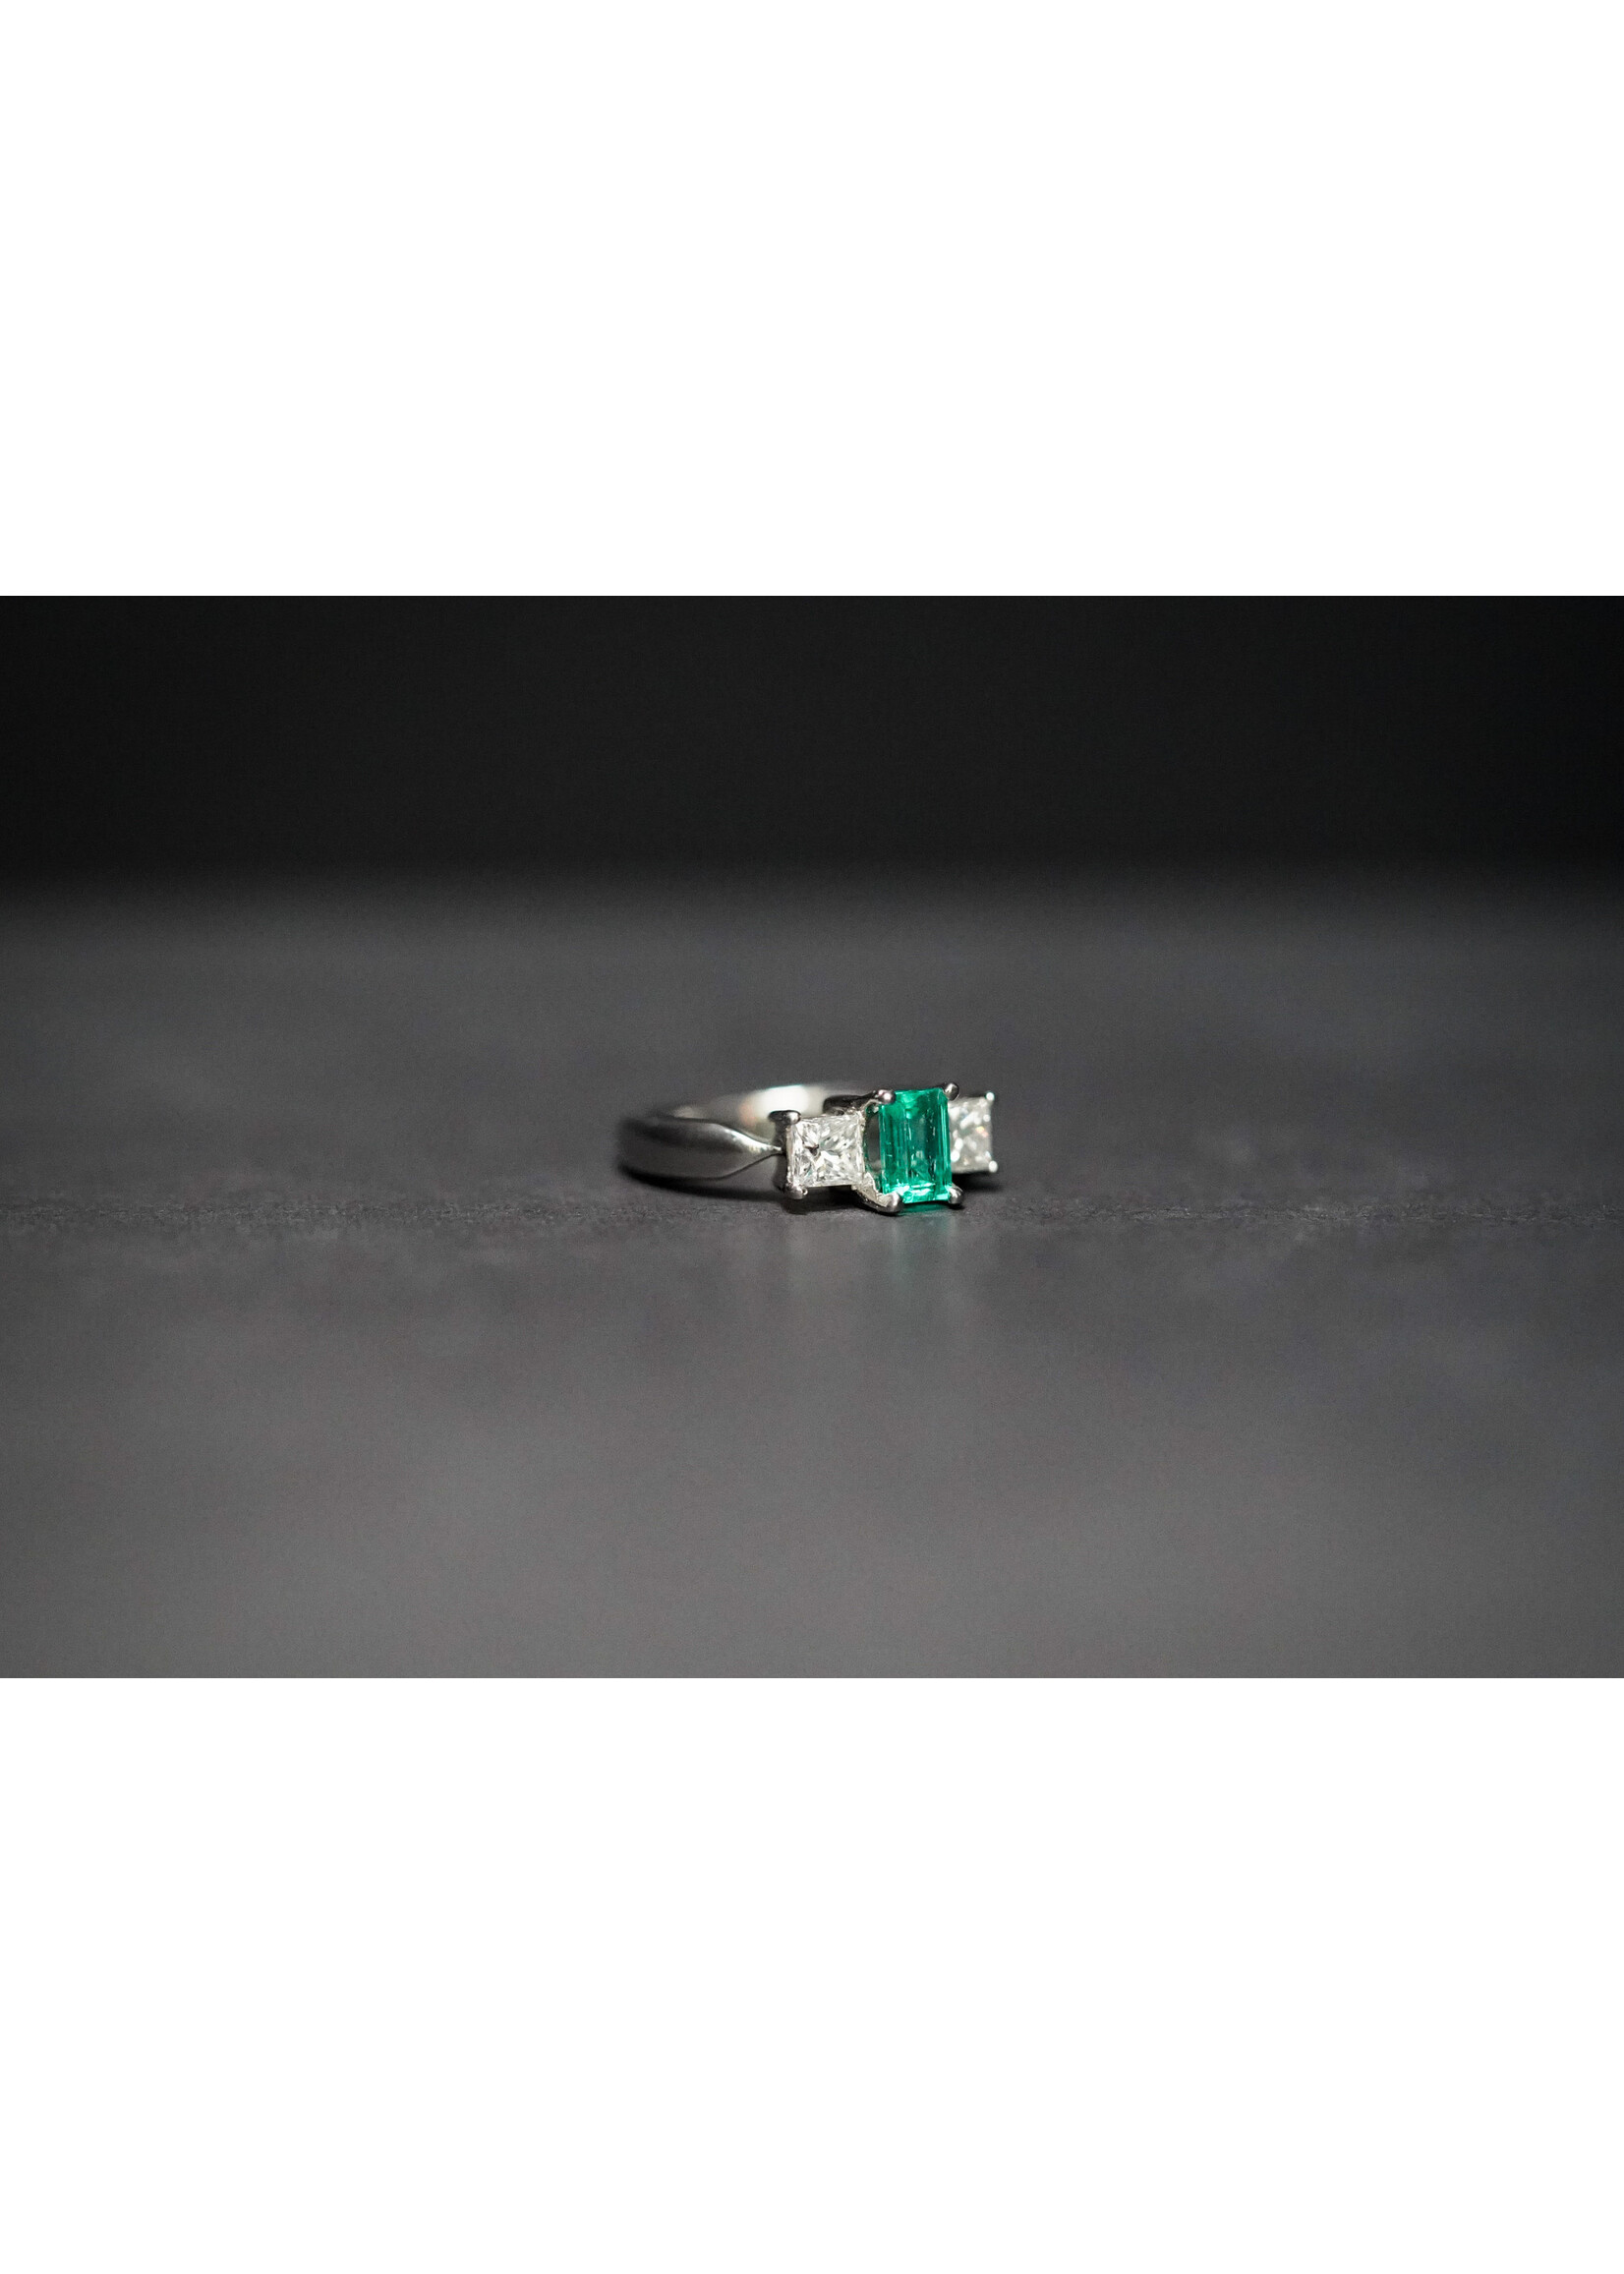 Platinum 7.01g 1.50ctw (.75ctr) Emerald & Diamond 3-Stone Ring (size 5)